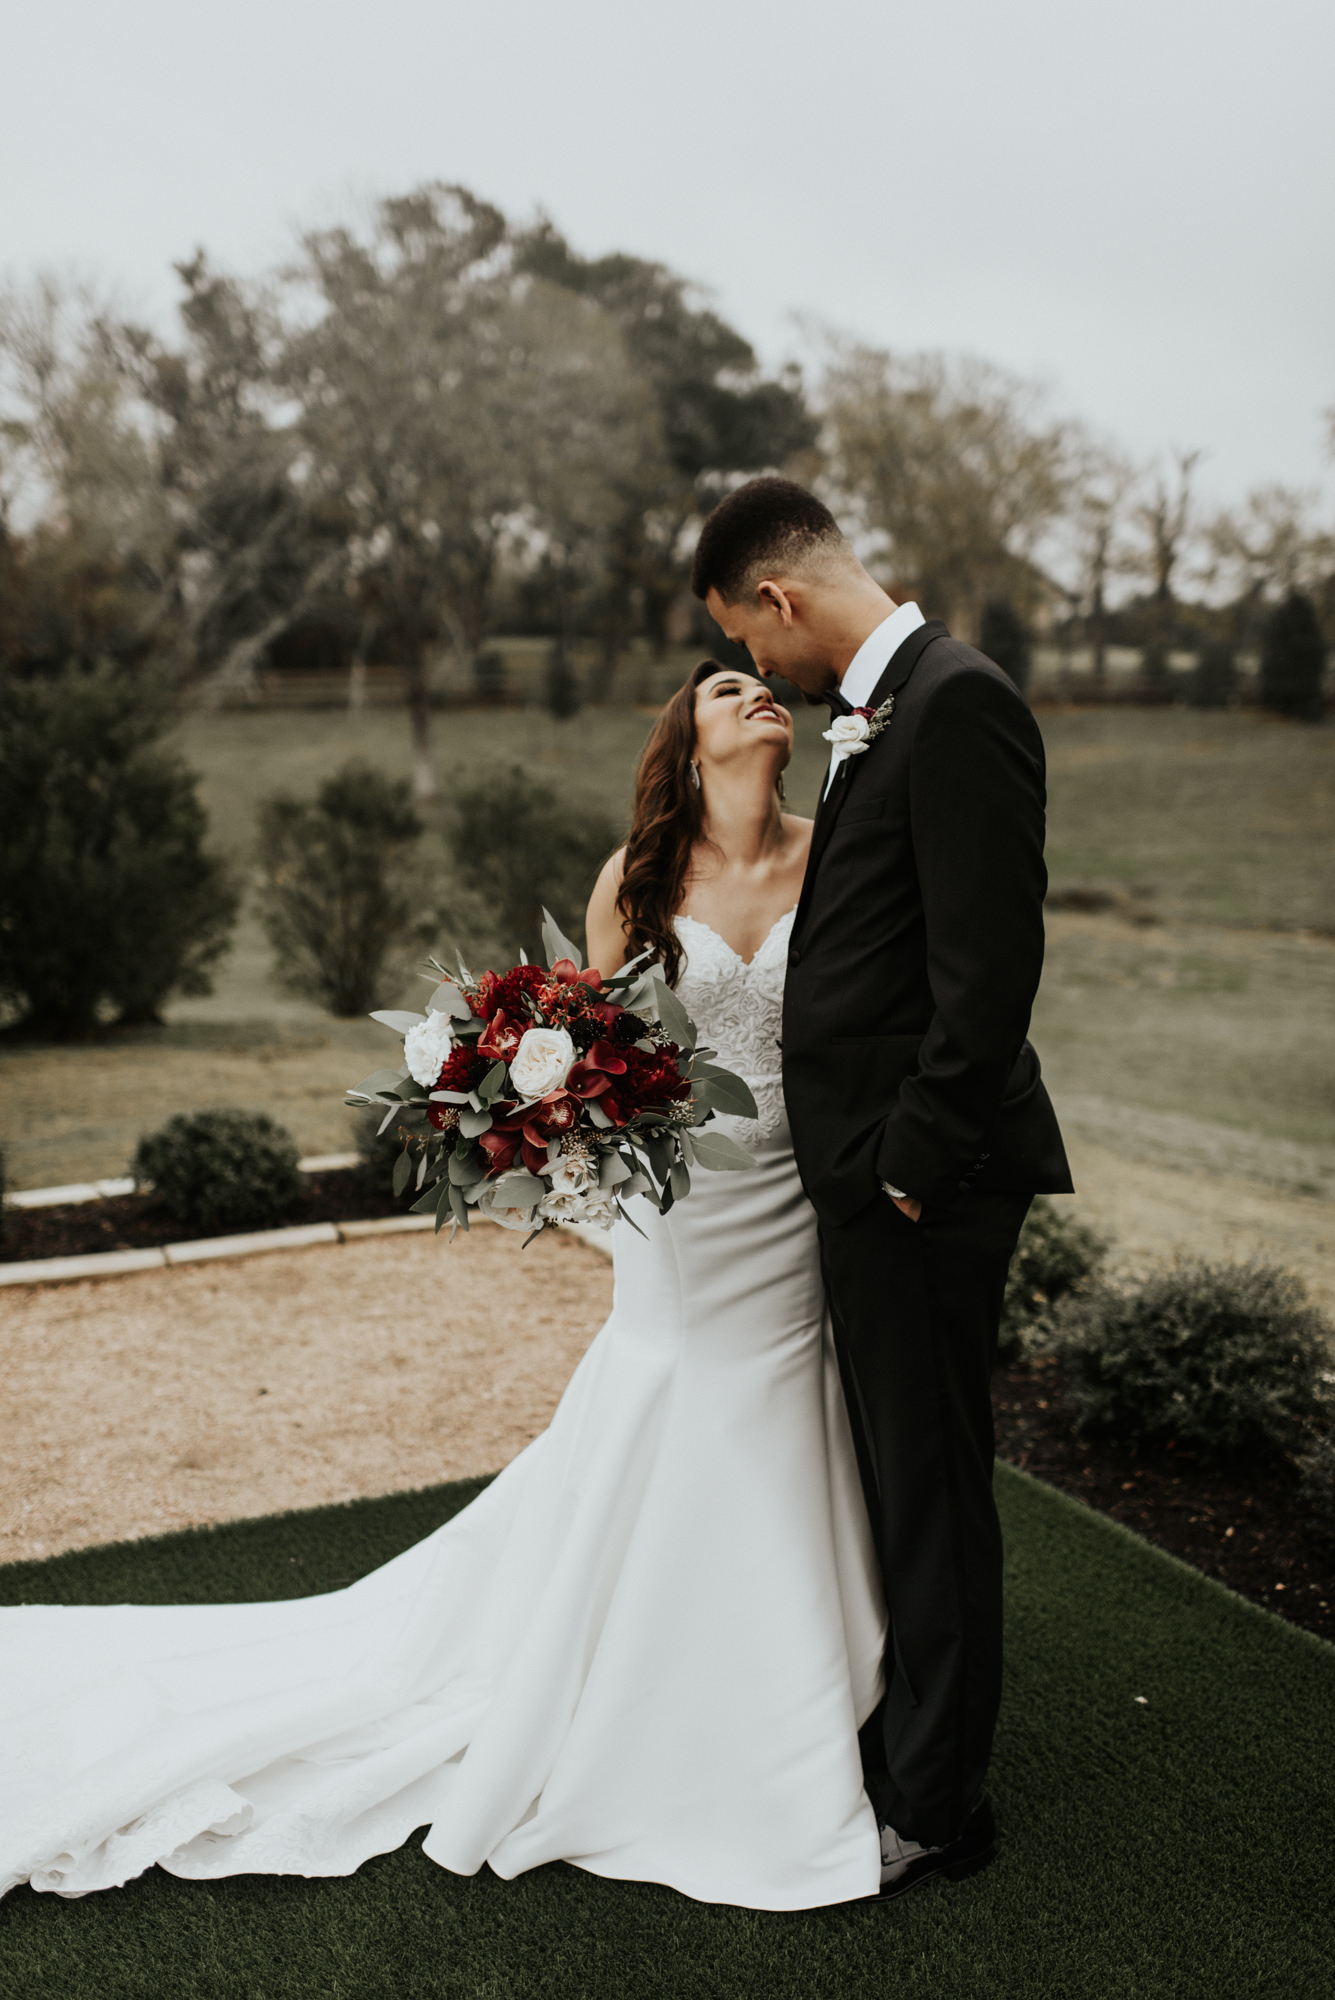 Intimate Destination Wedding Photographer, The Farmhouse in Houston, TX